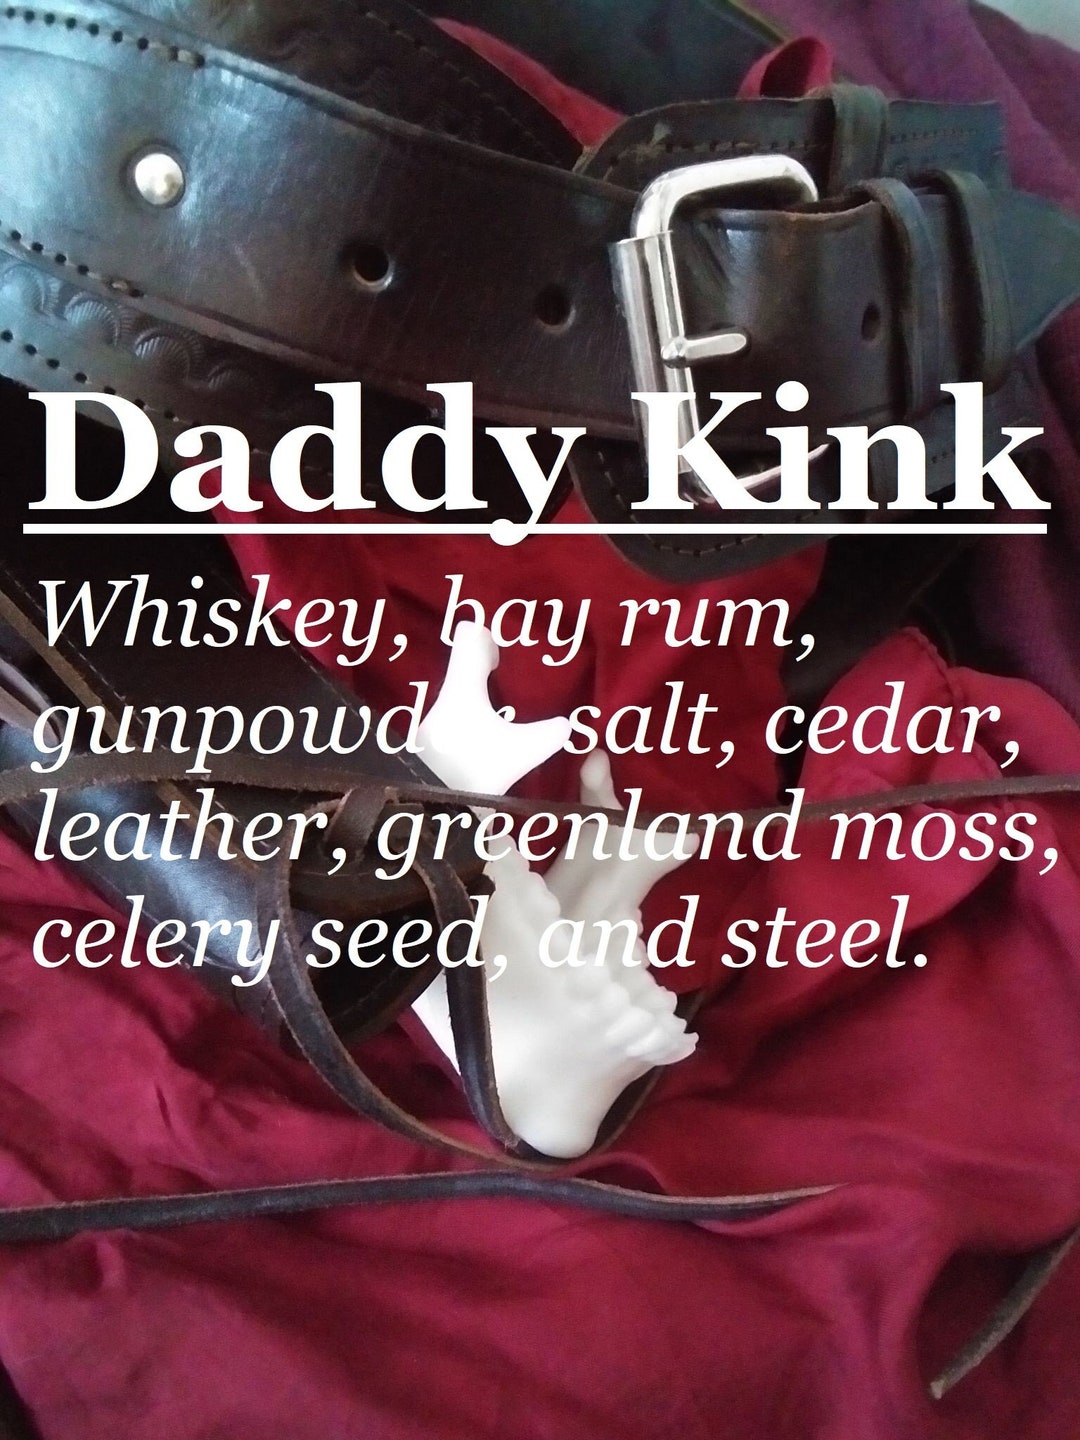 Dad kink